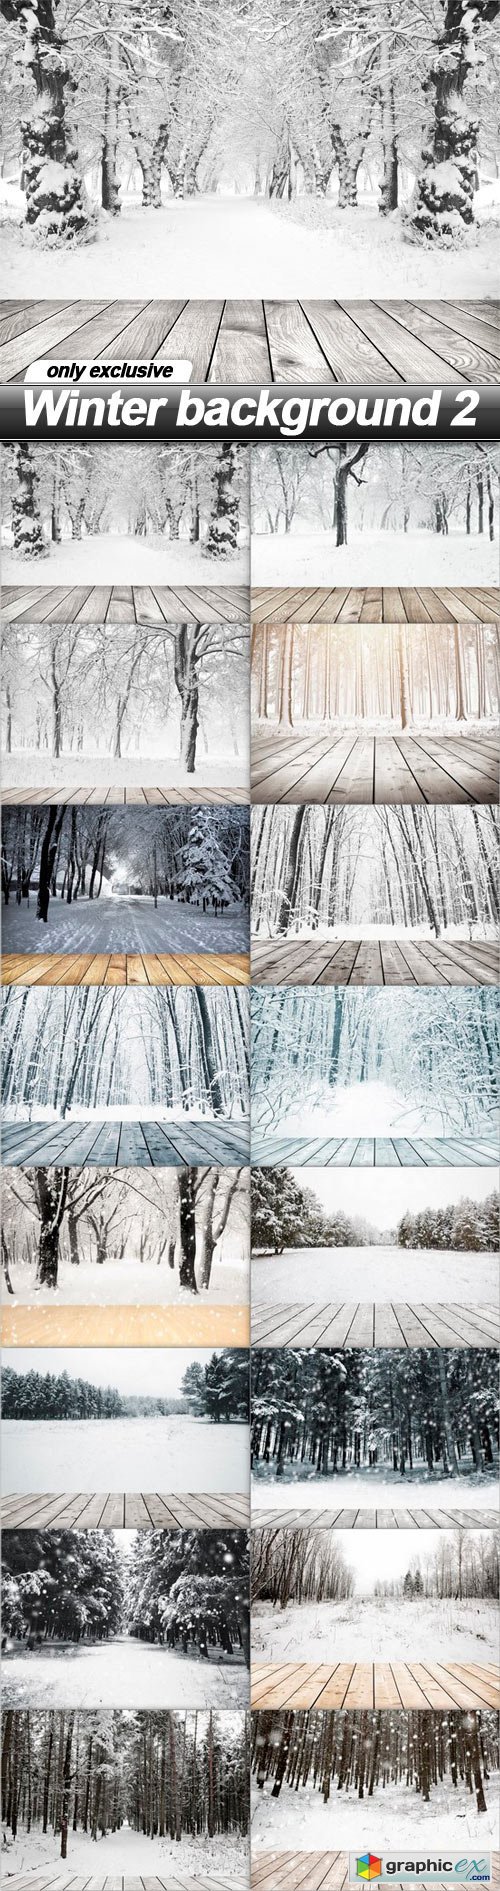 Winter background 2 - 16 UHQ JPEG